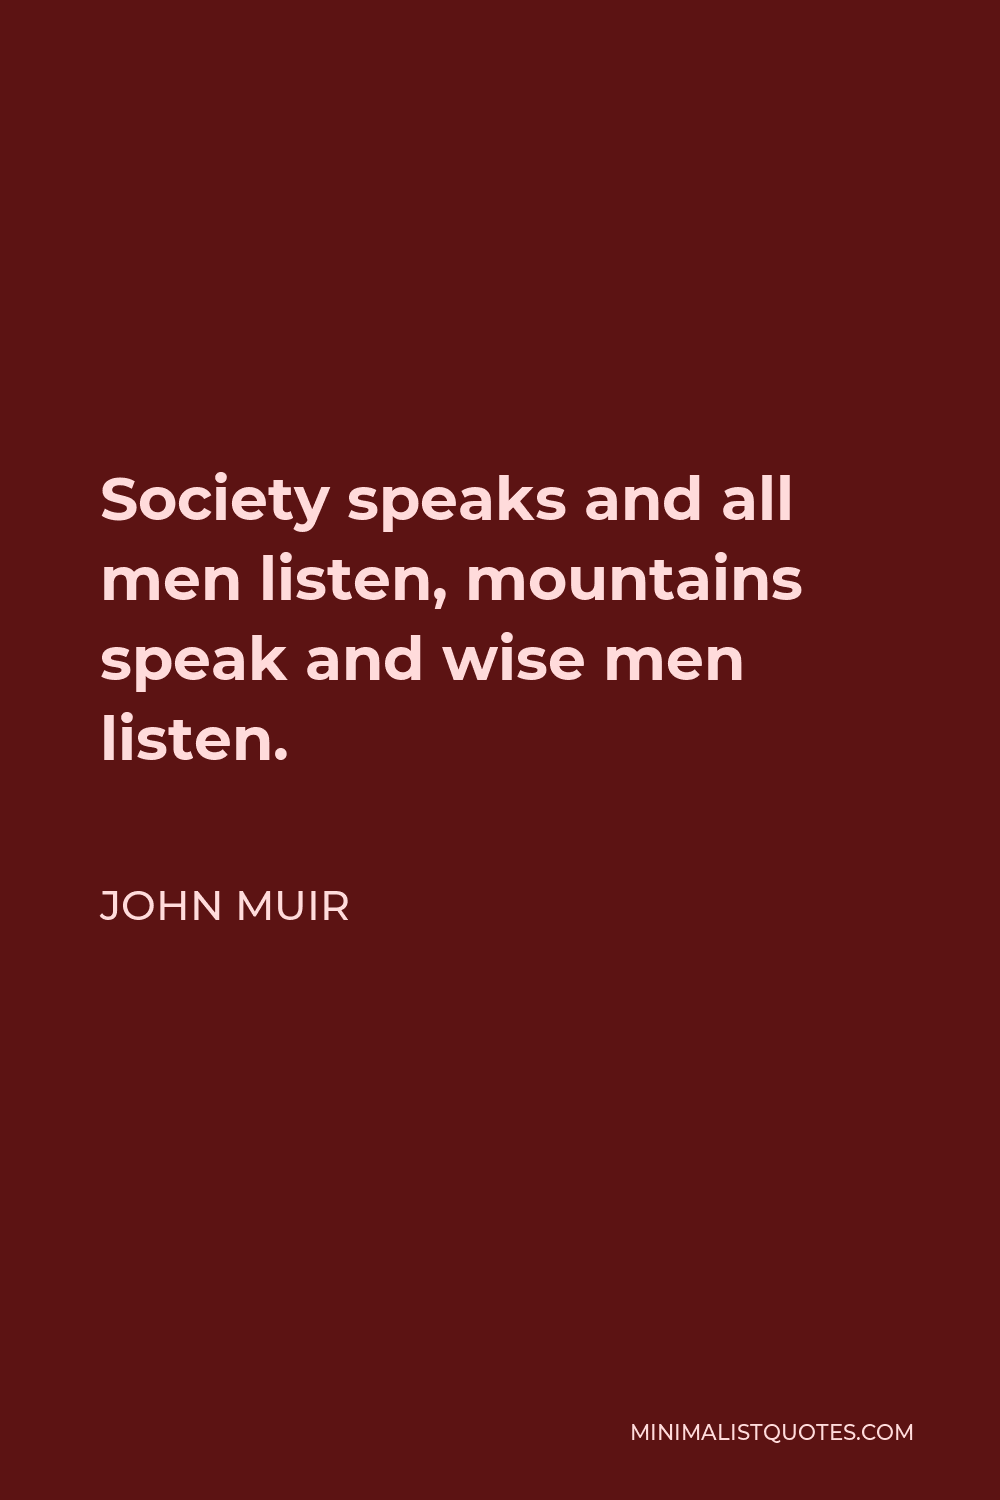 John Muir Quote - Society speaks and all men listen, mountains speak and wise men listen.